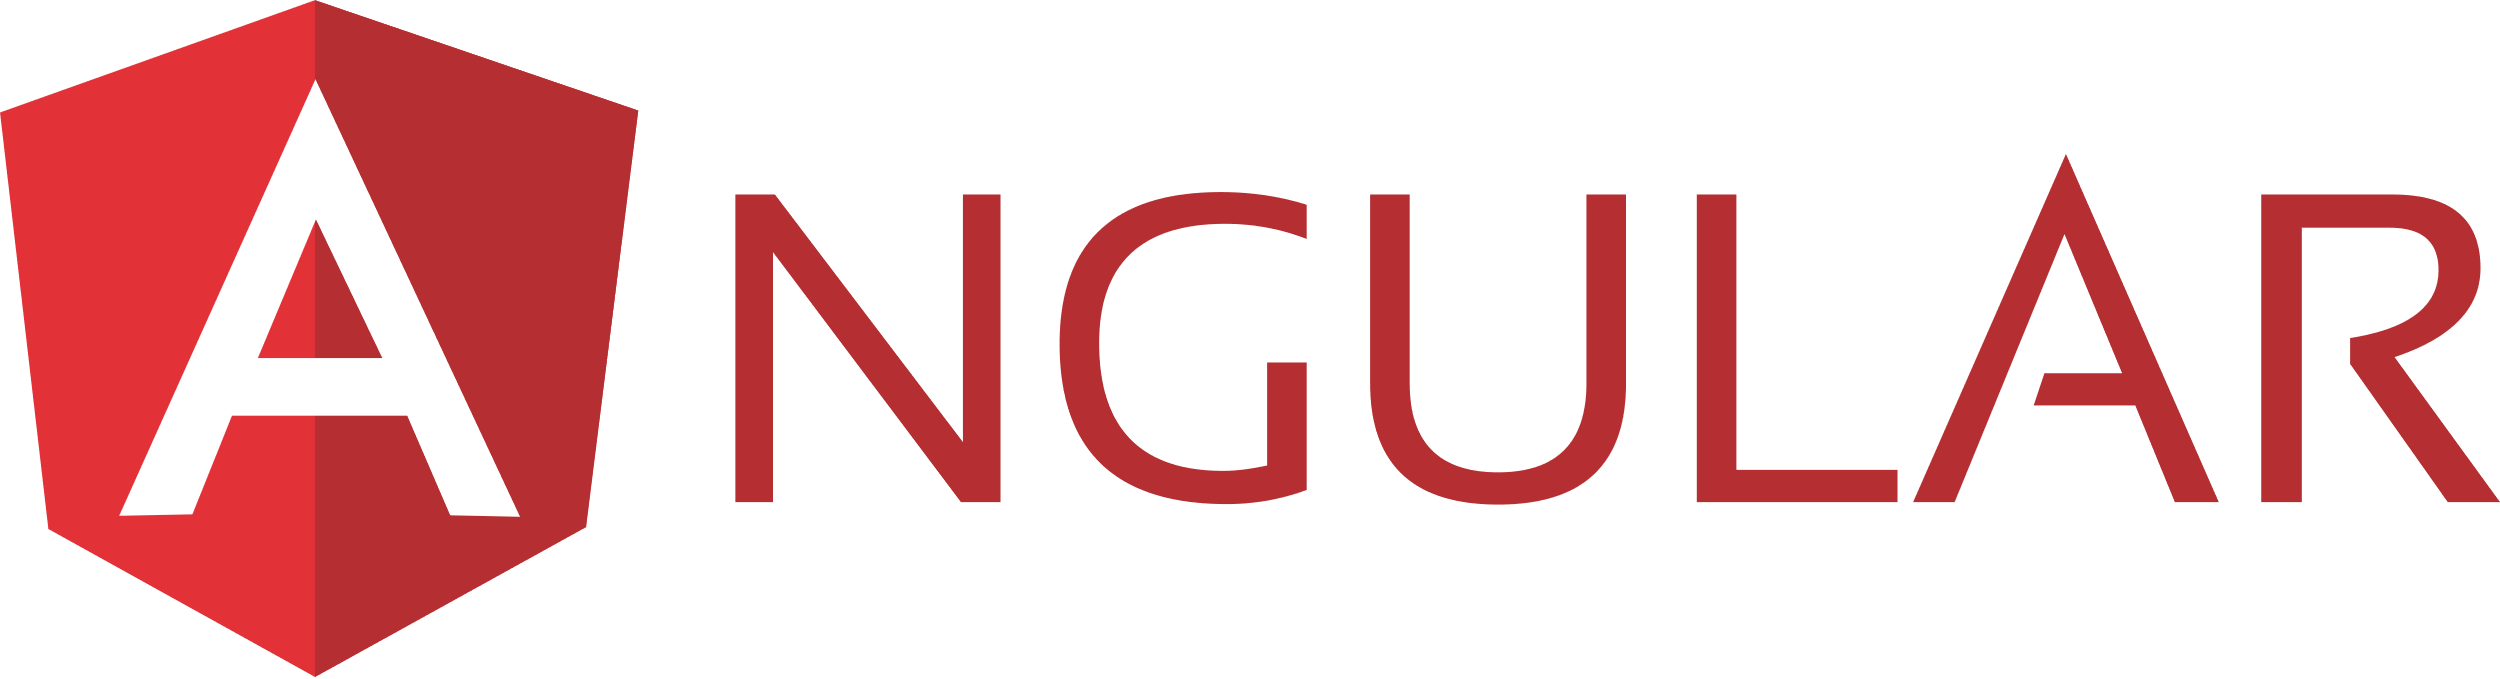 Angular-Logo